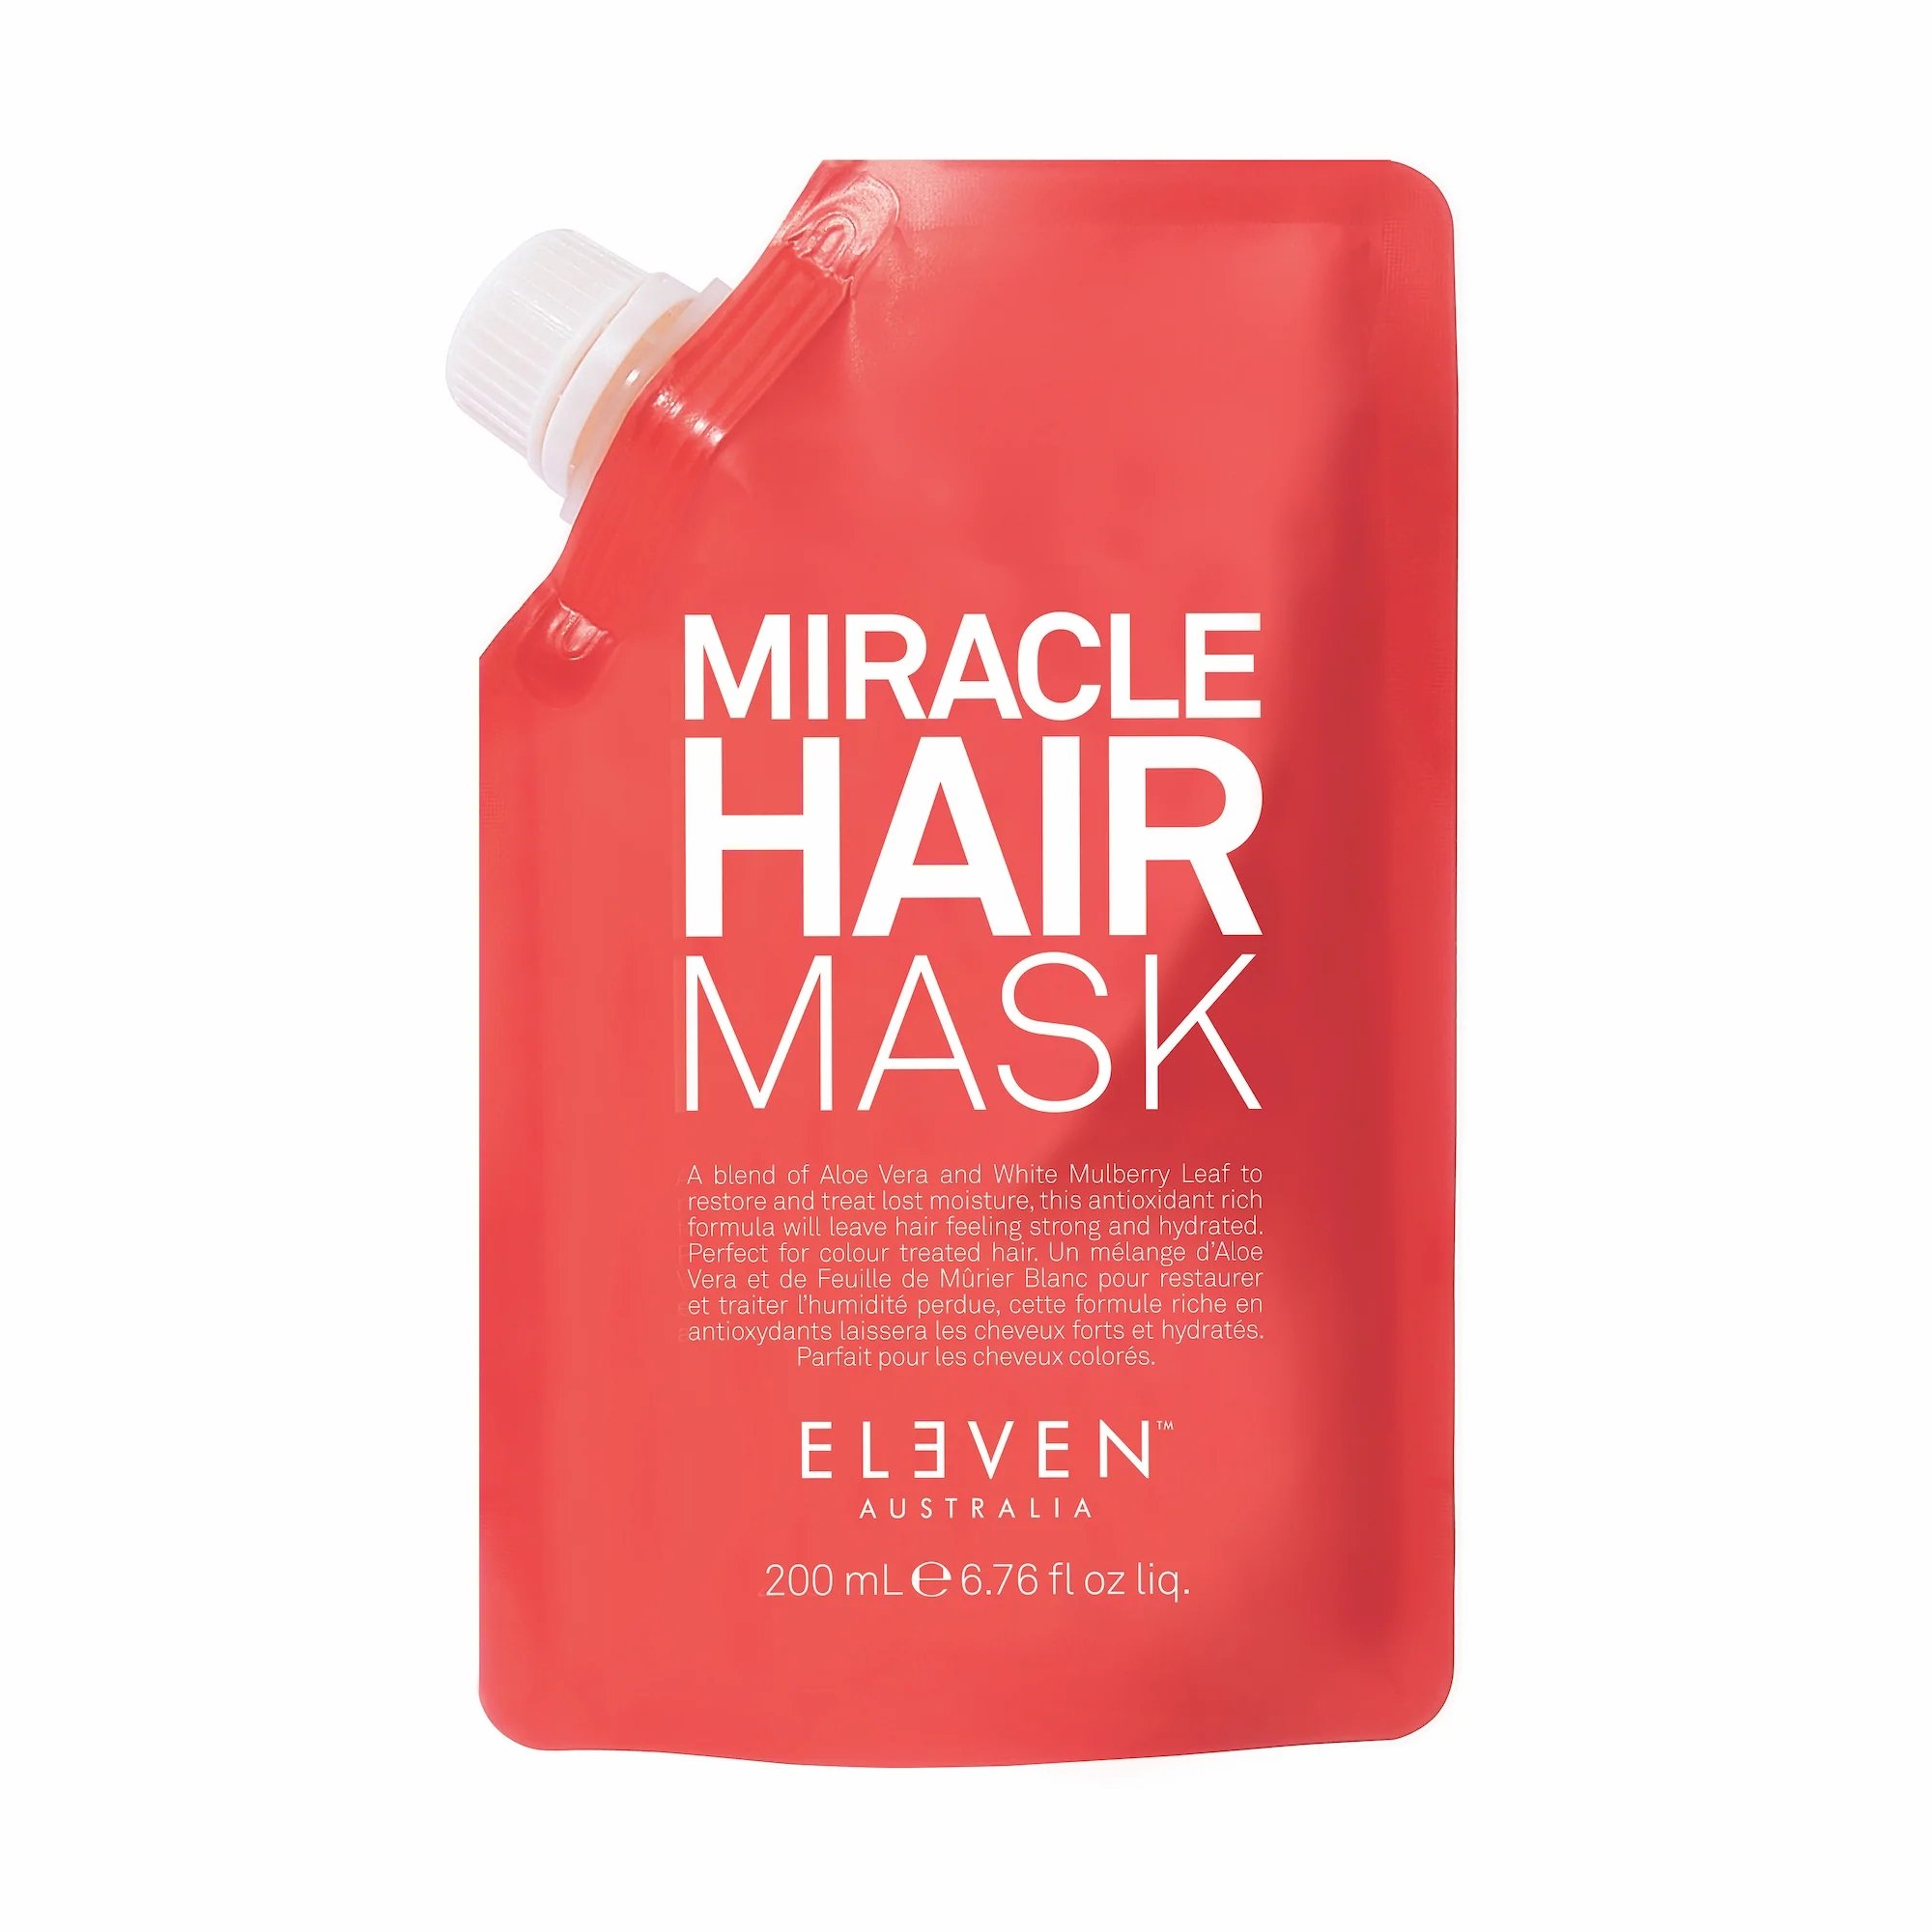 21.ELEVEN AUSTRALIA Miracle Hair Mask €22, 